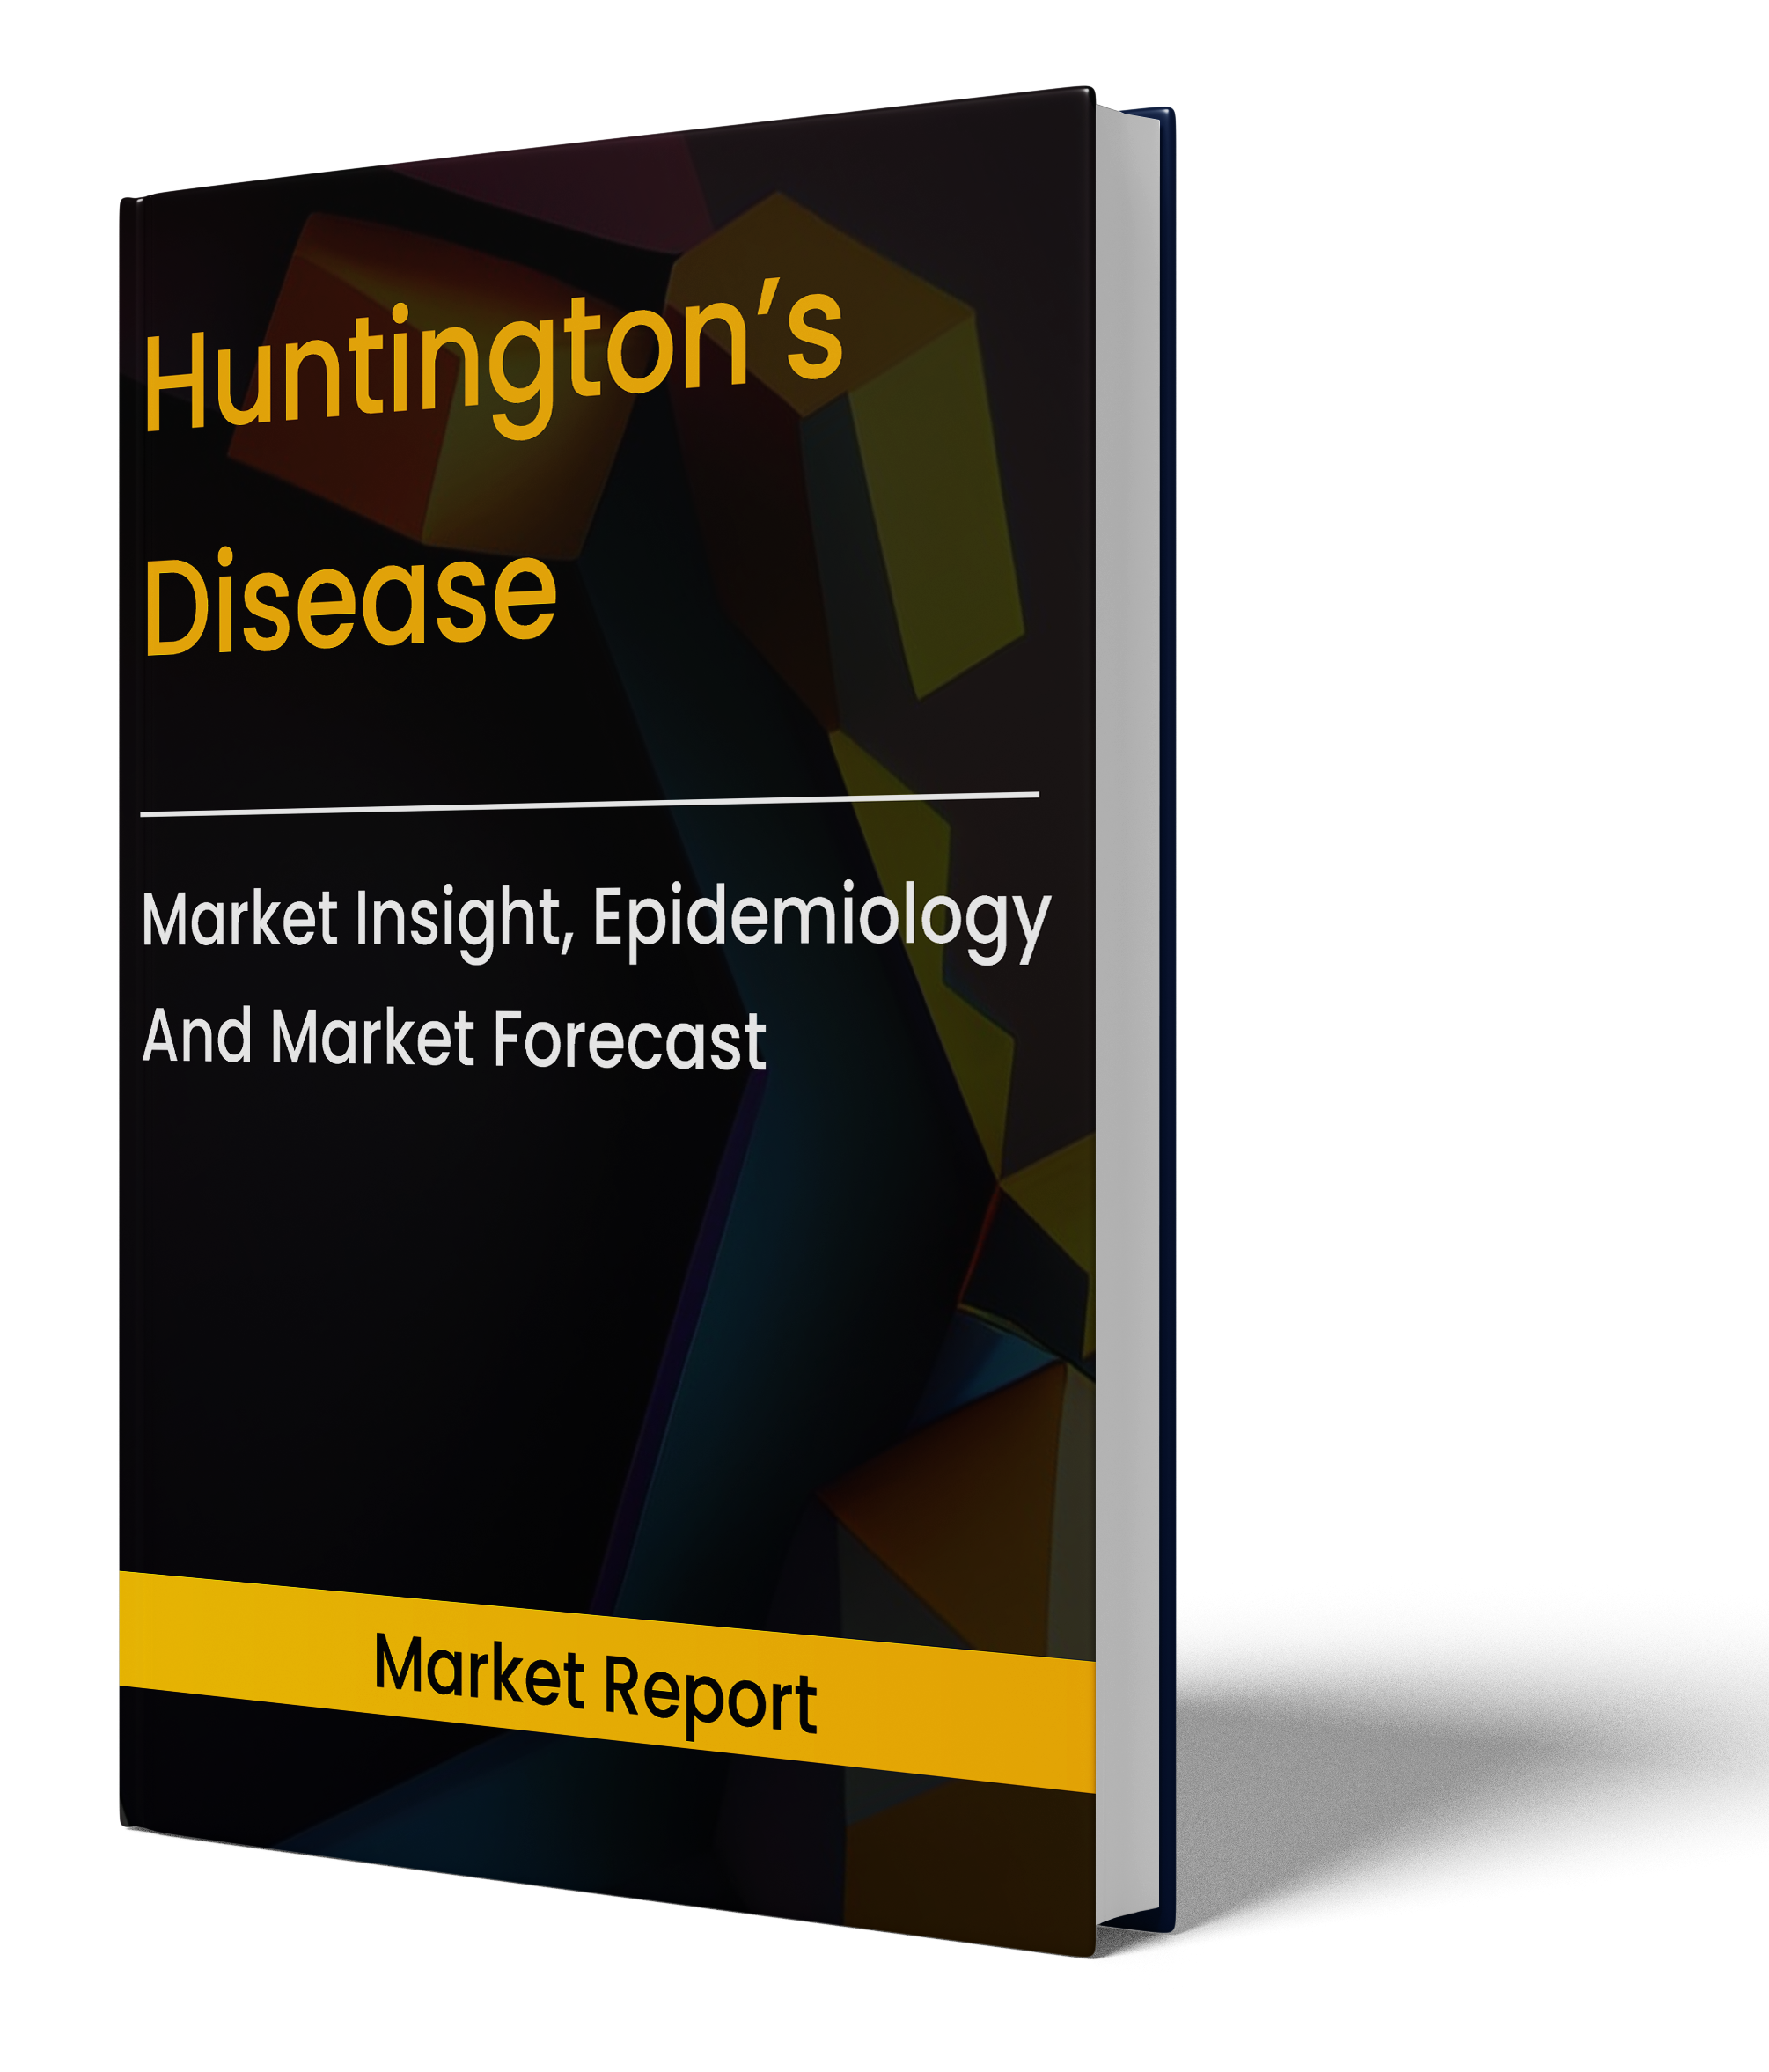 Huntington’s Disease market report